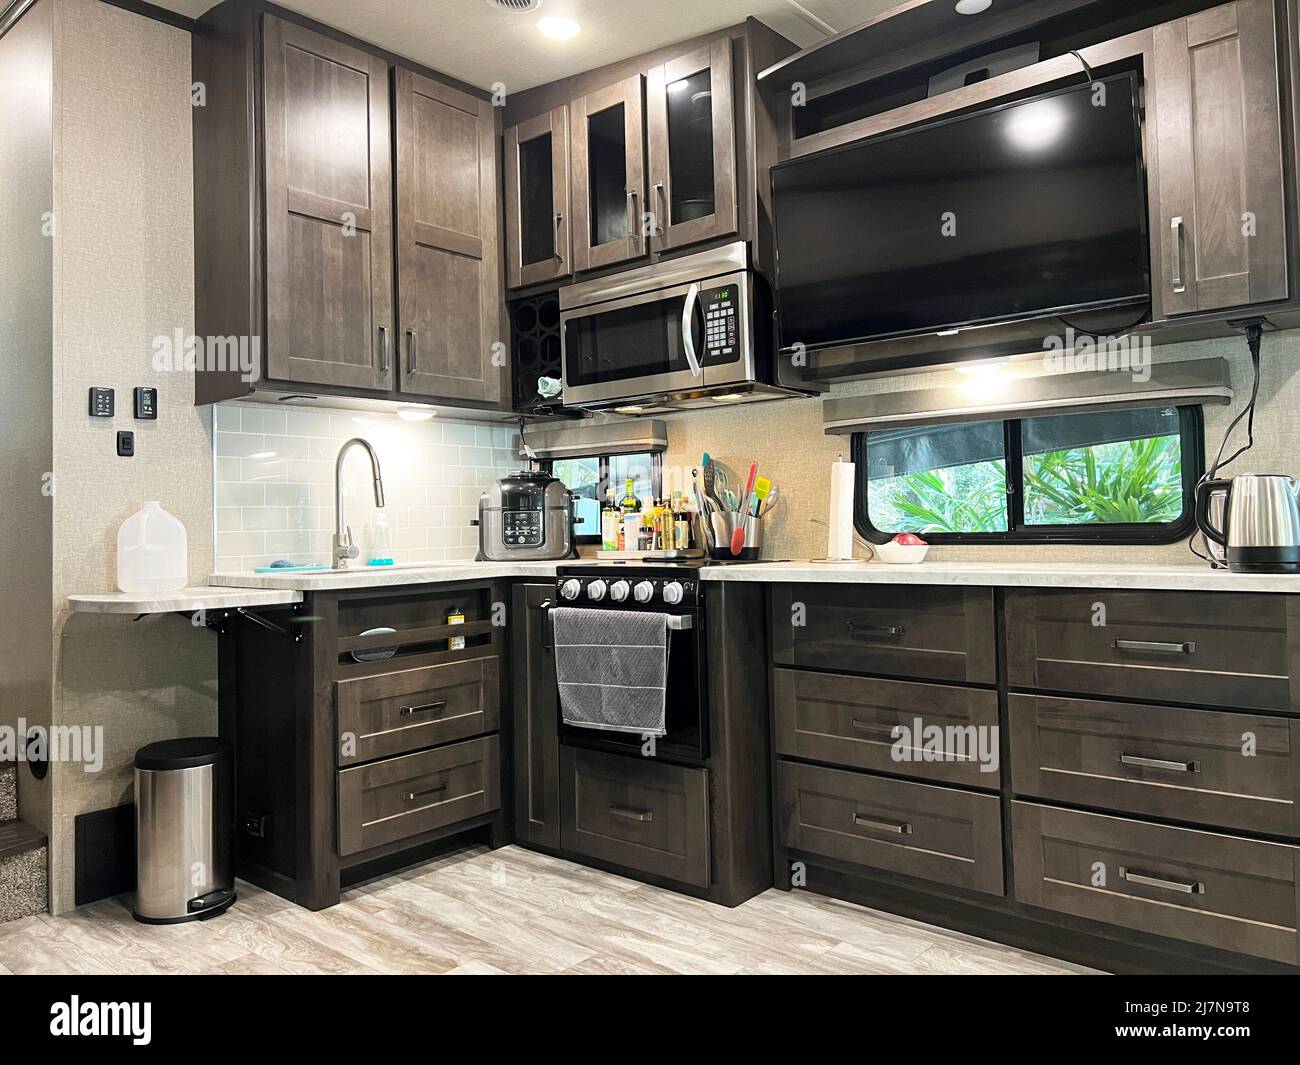 Interior of a modern kitchen in a luxury fifth wheel trailer caravan. Stock Photo